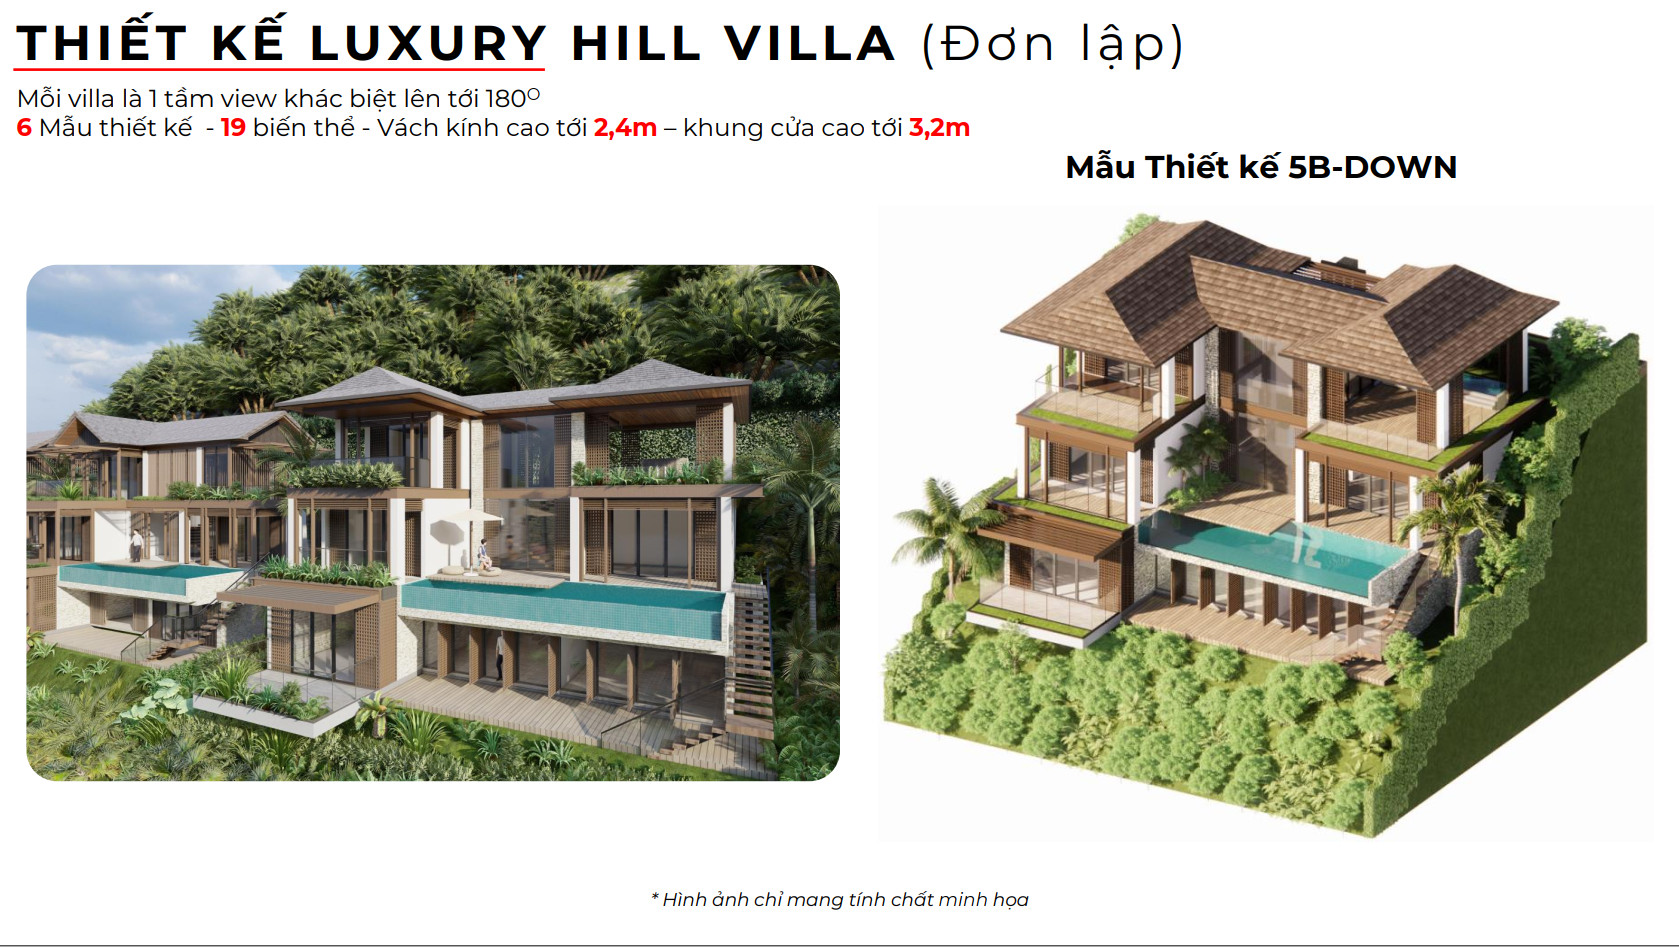 thiet ke luxury hill villa don lap bai sao 1